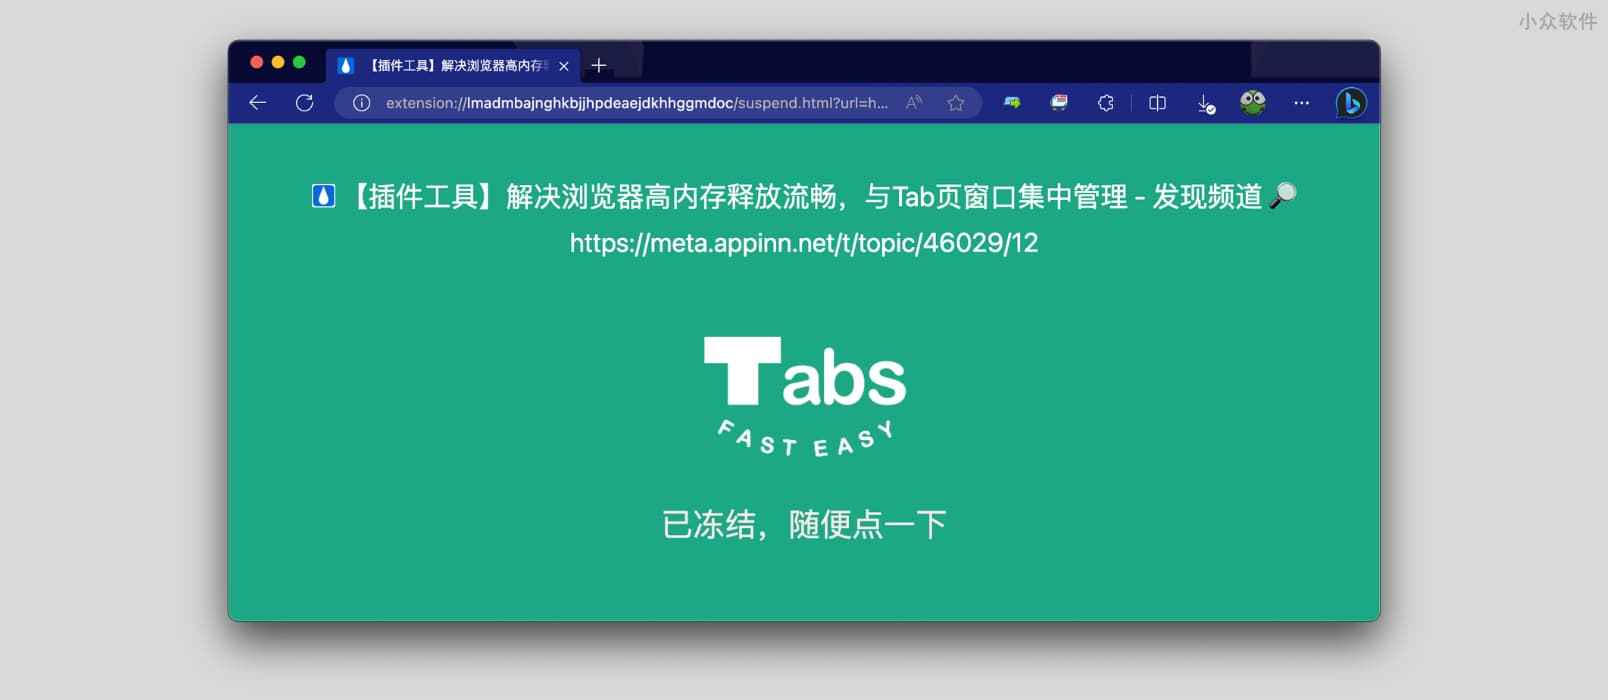 用 Tabs Fast Easy 自动冻结标签页：释放内存，提高流畅度。还能跨窗口跳转标签页[Chrome/Edge]